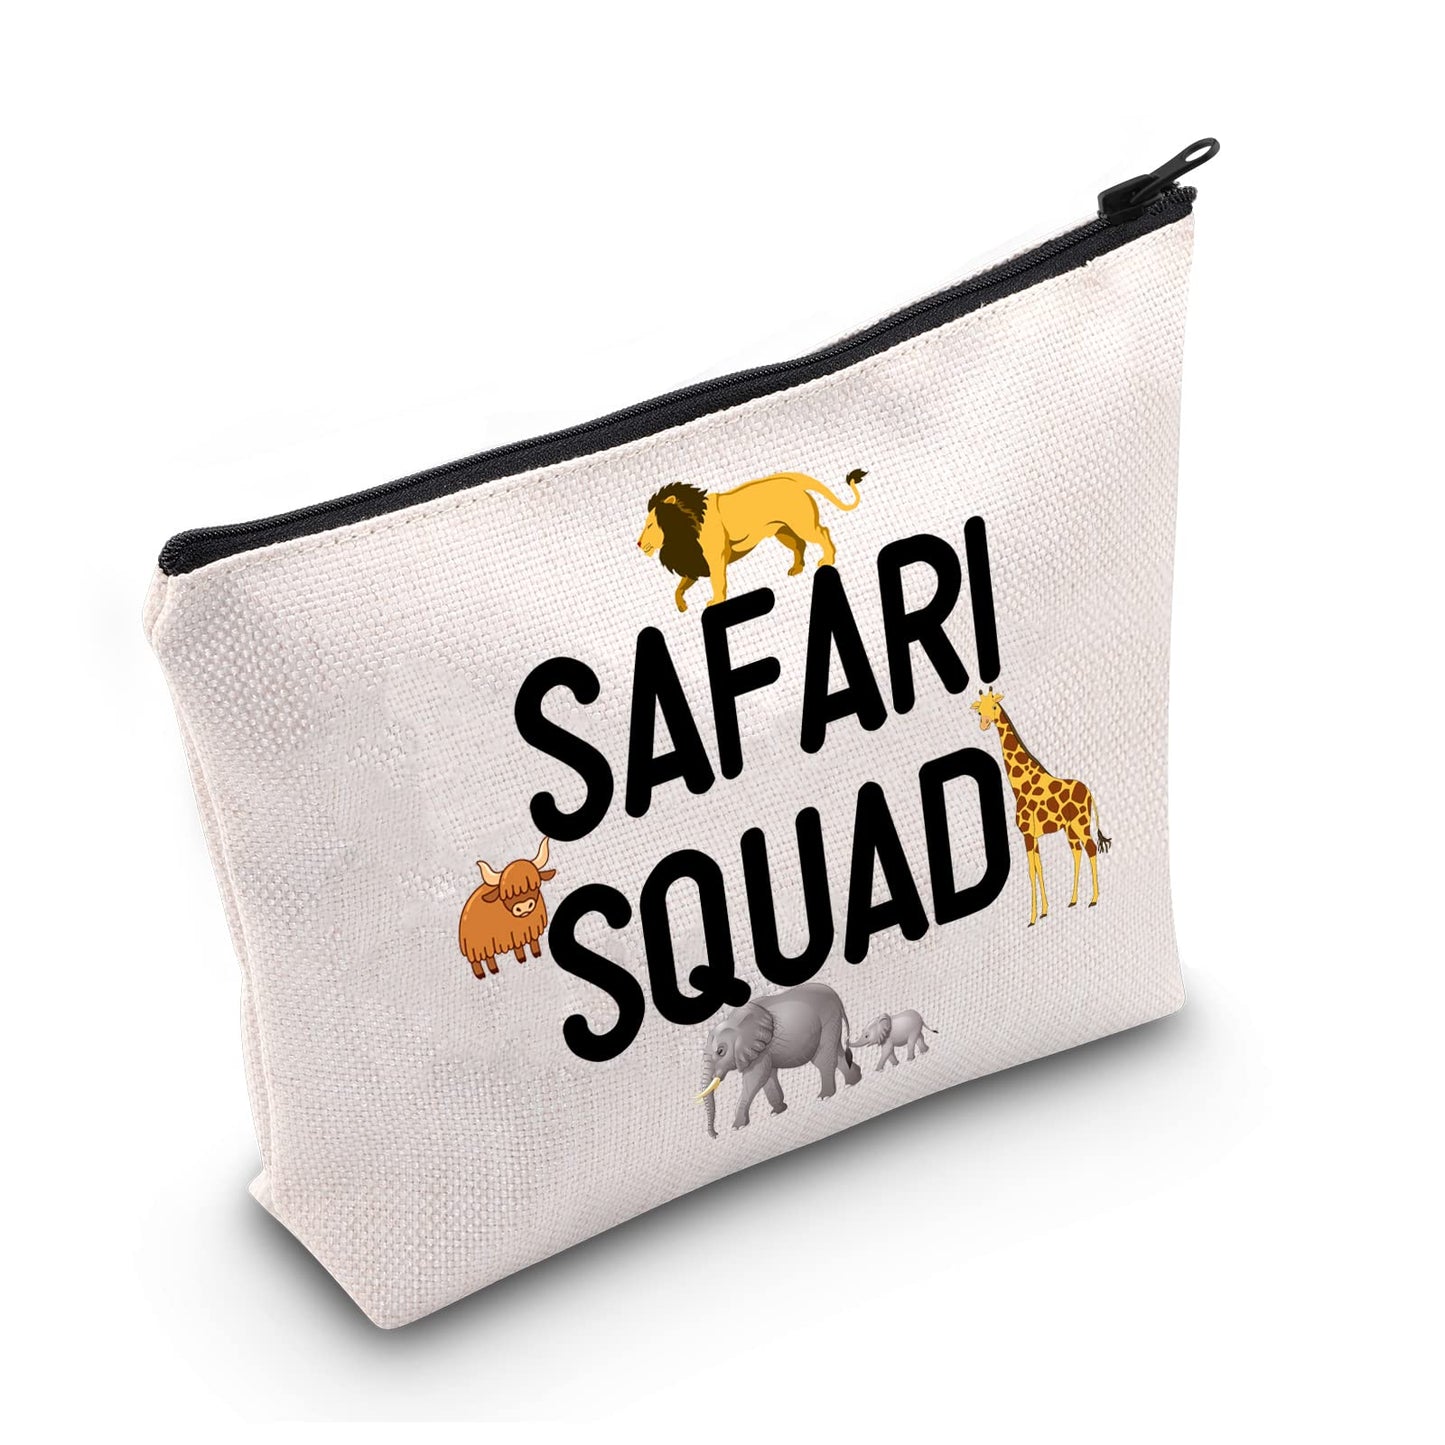 LEVLO Safari Squad Makeup Bag African Safari Trip Wild Animal Lover Travel Zipper Pouch(Safari Squad)